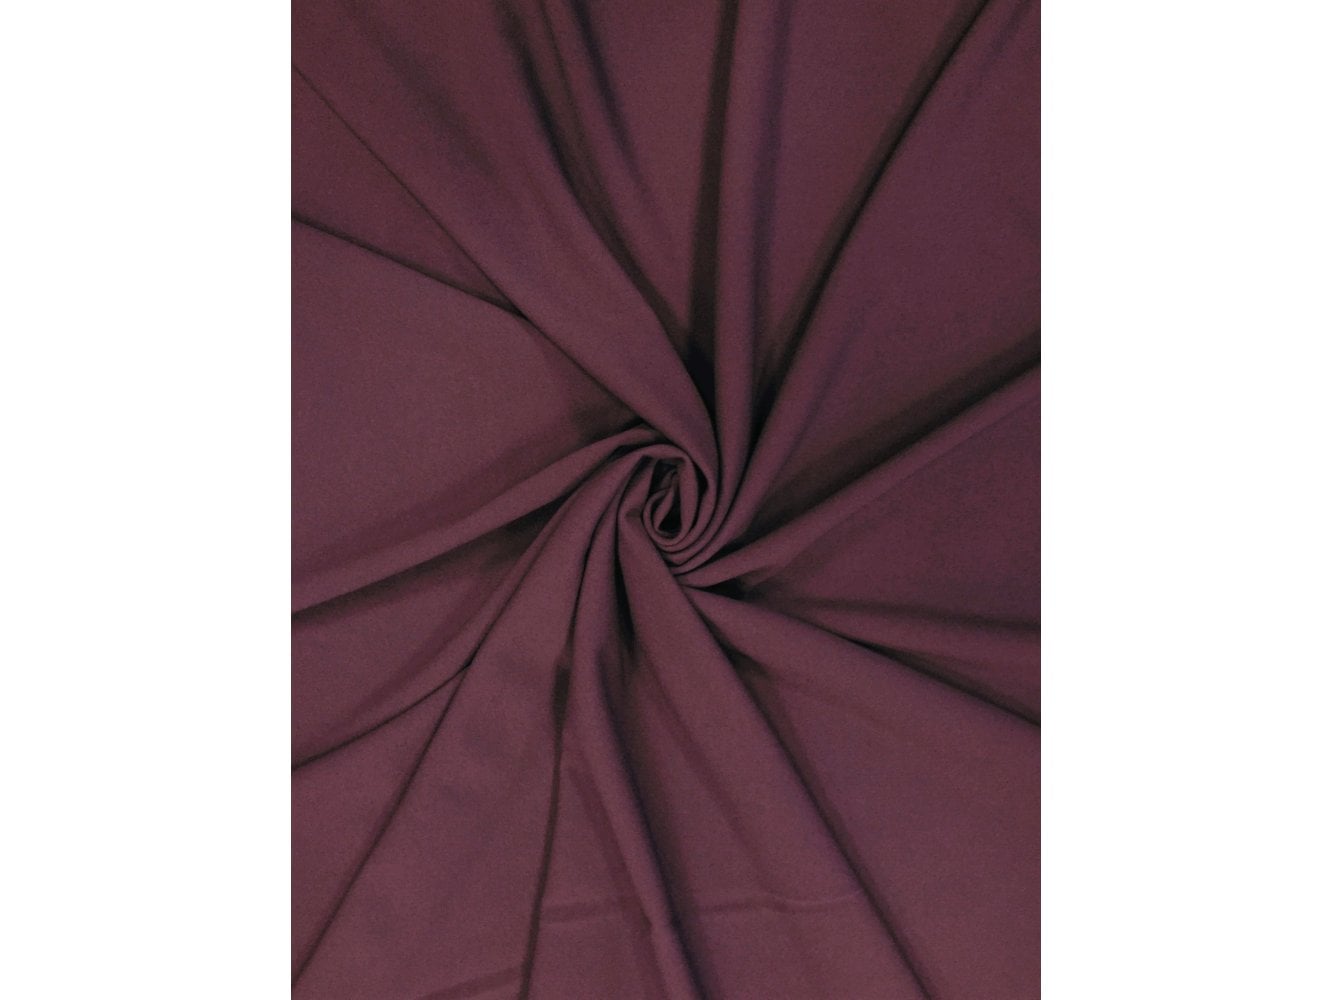 Darbari New 4 Way Stretch Crepe Jersey Dressmaking Fabric- Aubergine